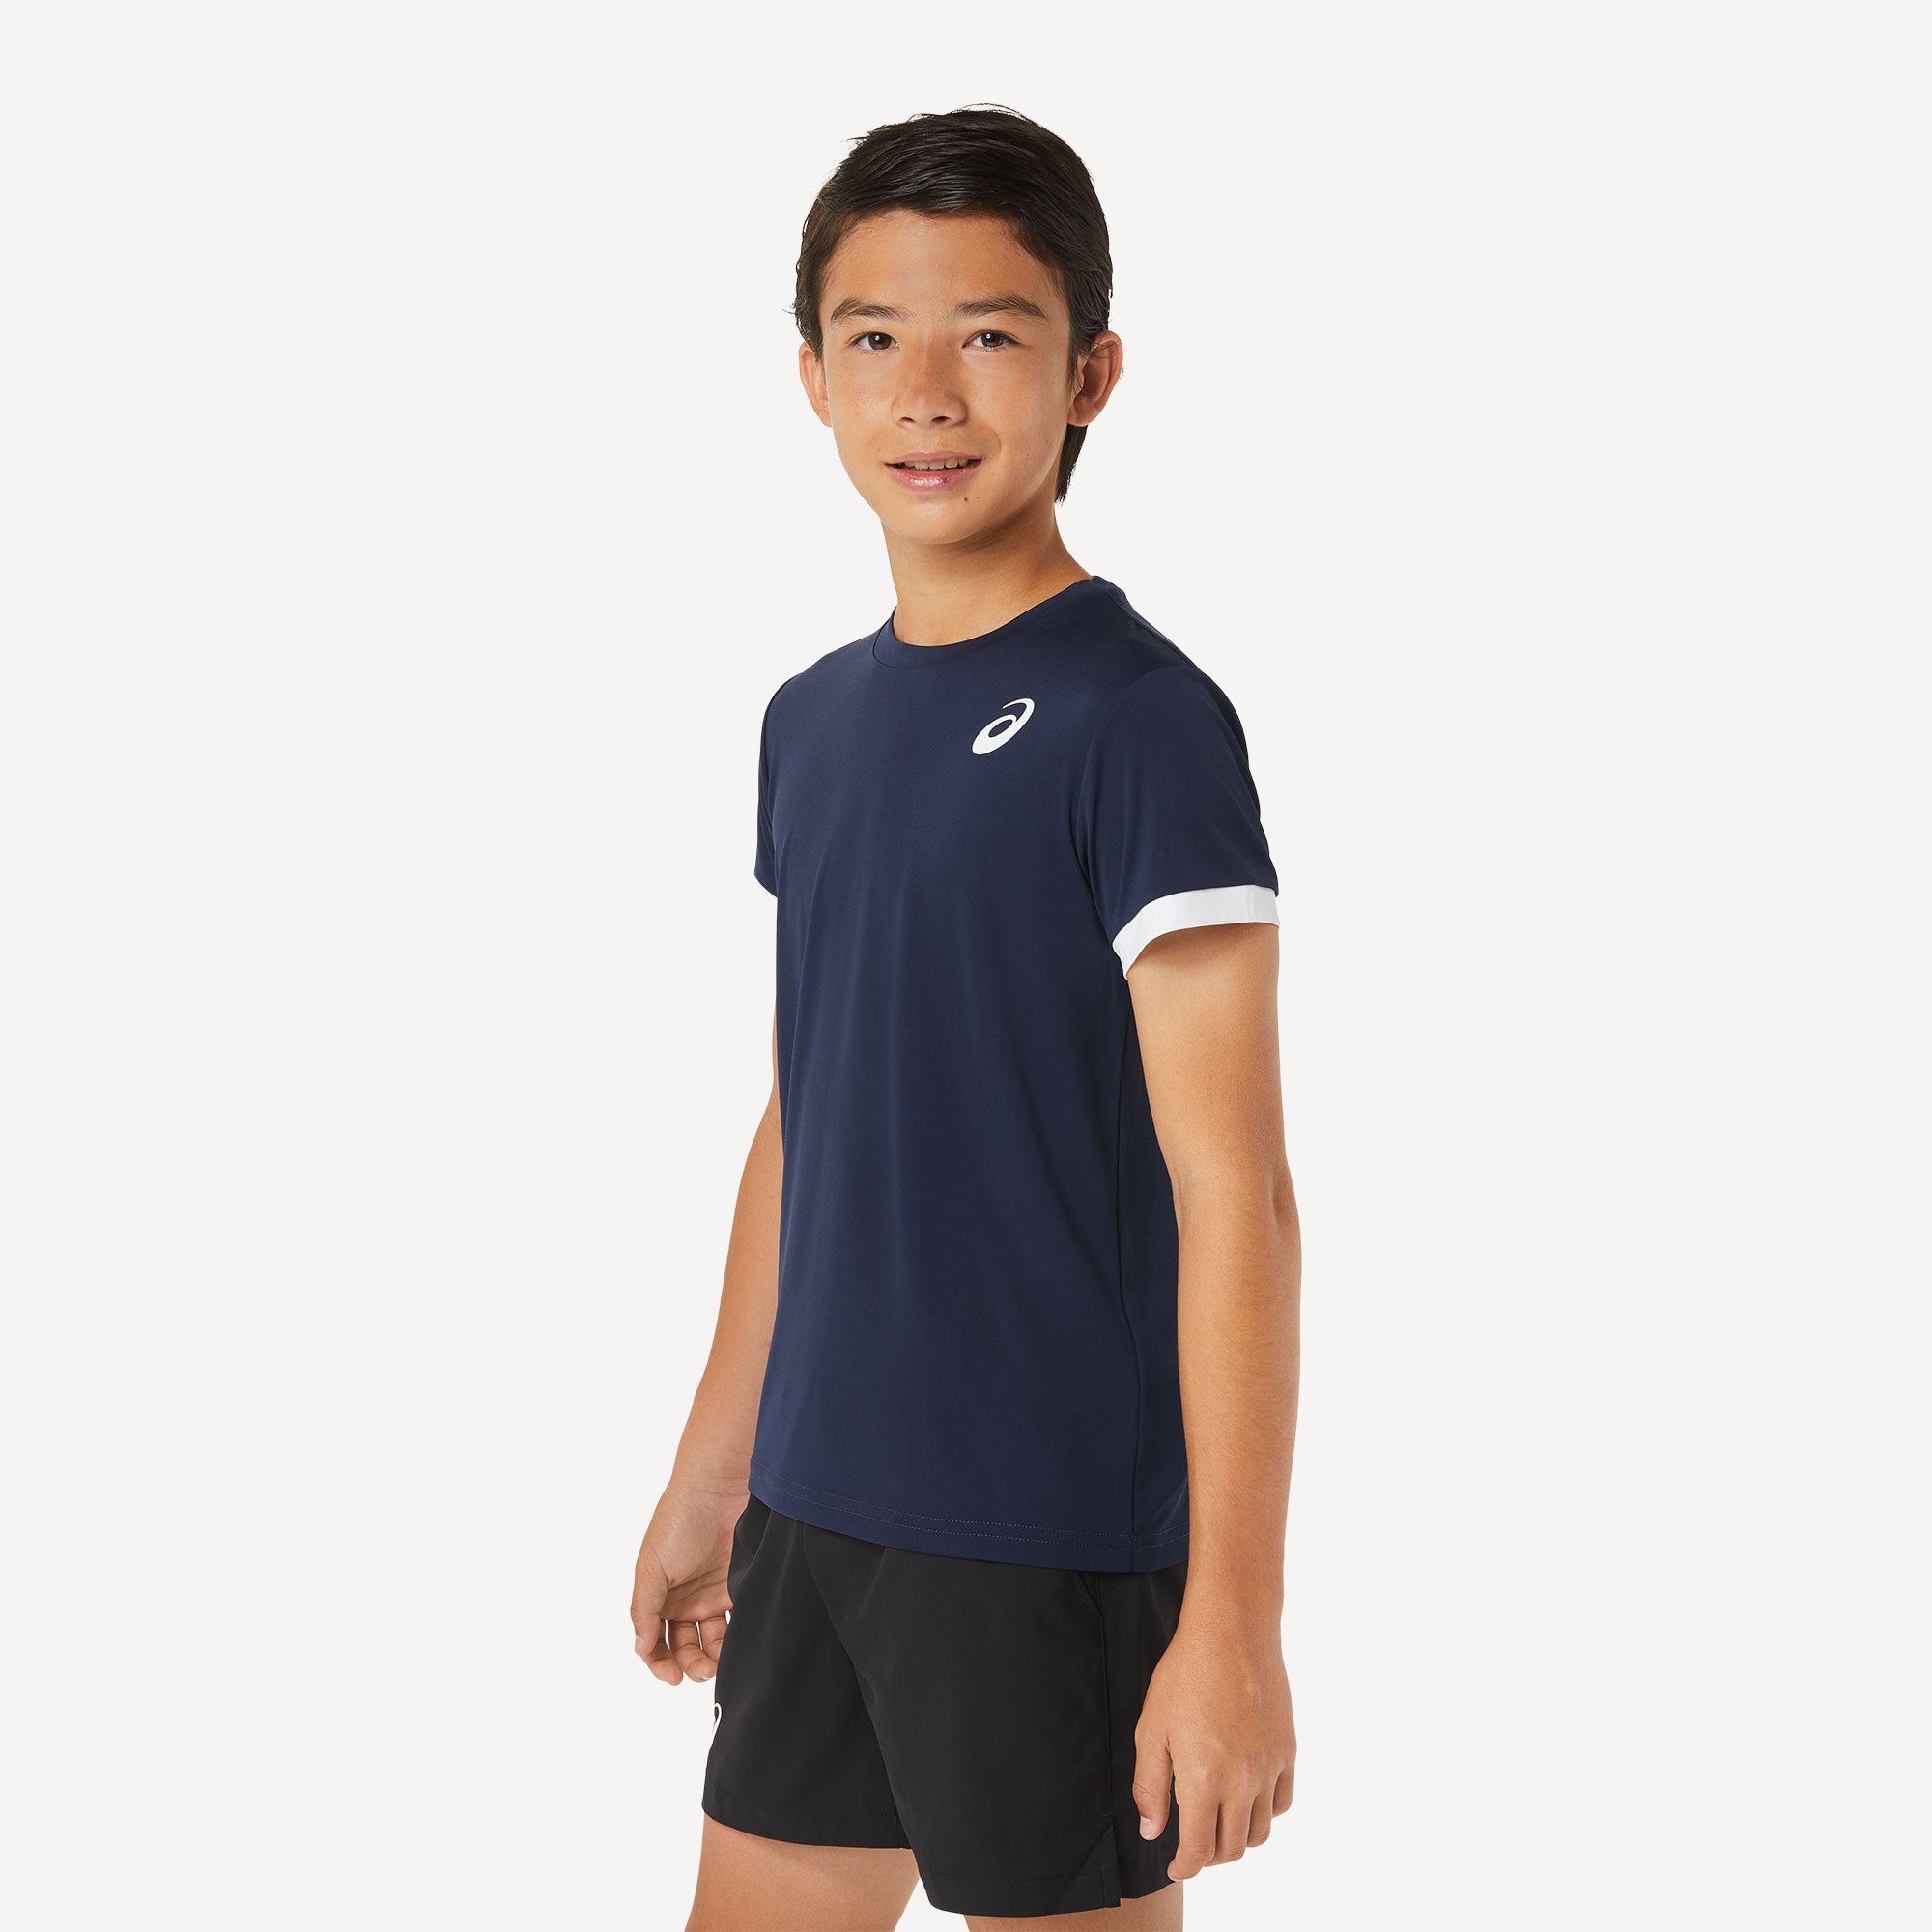 ASICS Boys' Tennis Shirt Blue (3)